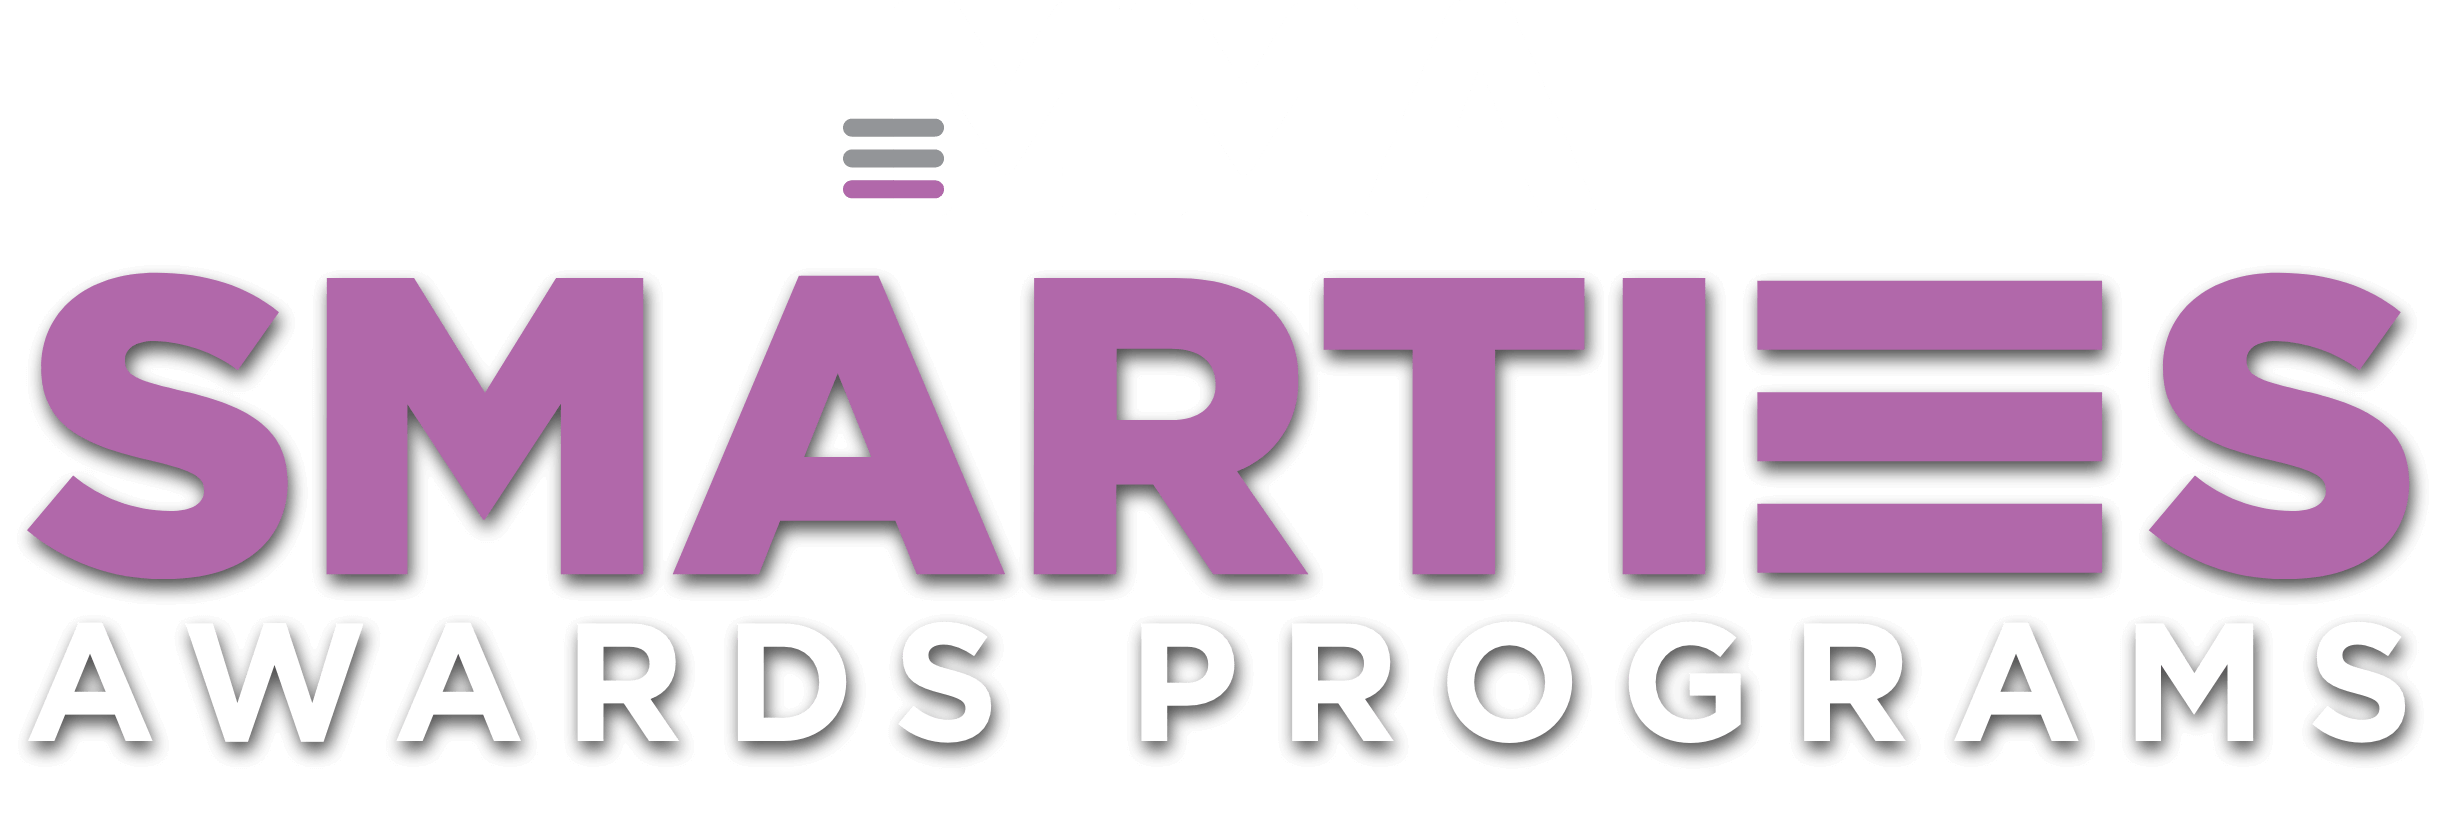 MMA SMARTIES Awards Programs